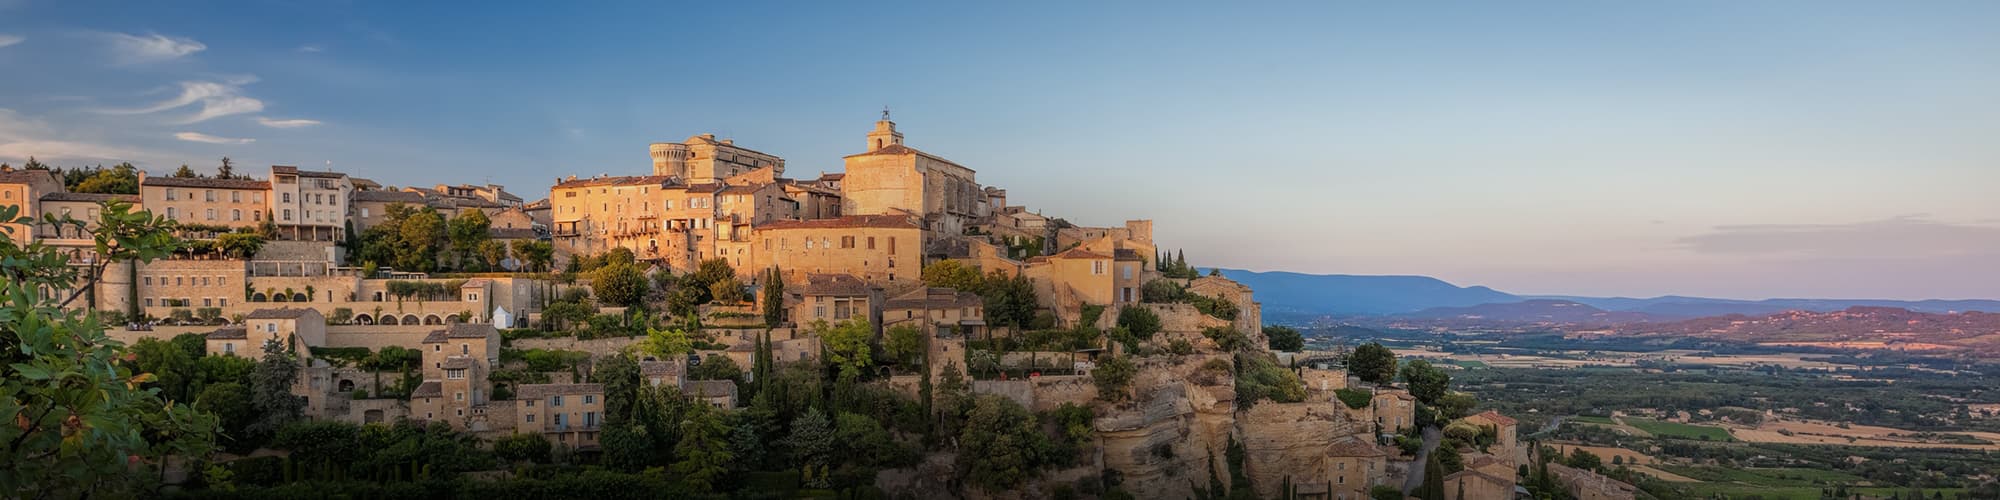 Voyage en Provence - Côte d'Azur © Extravagantni / iStock